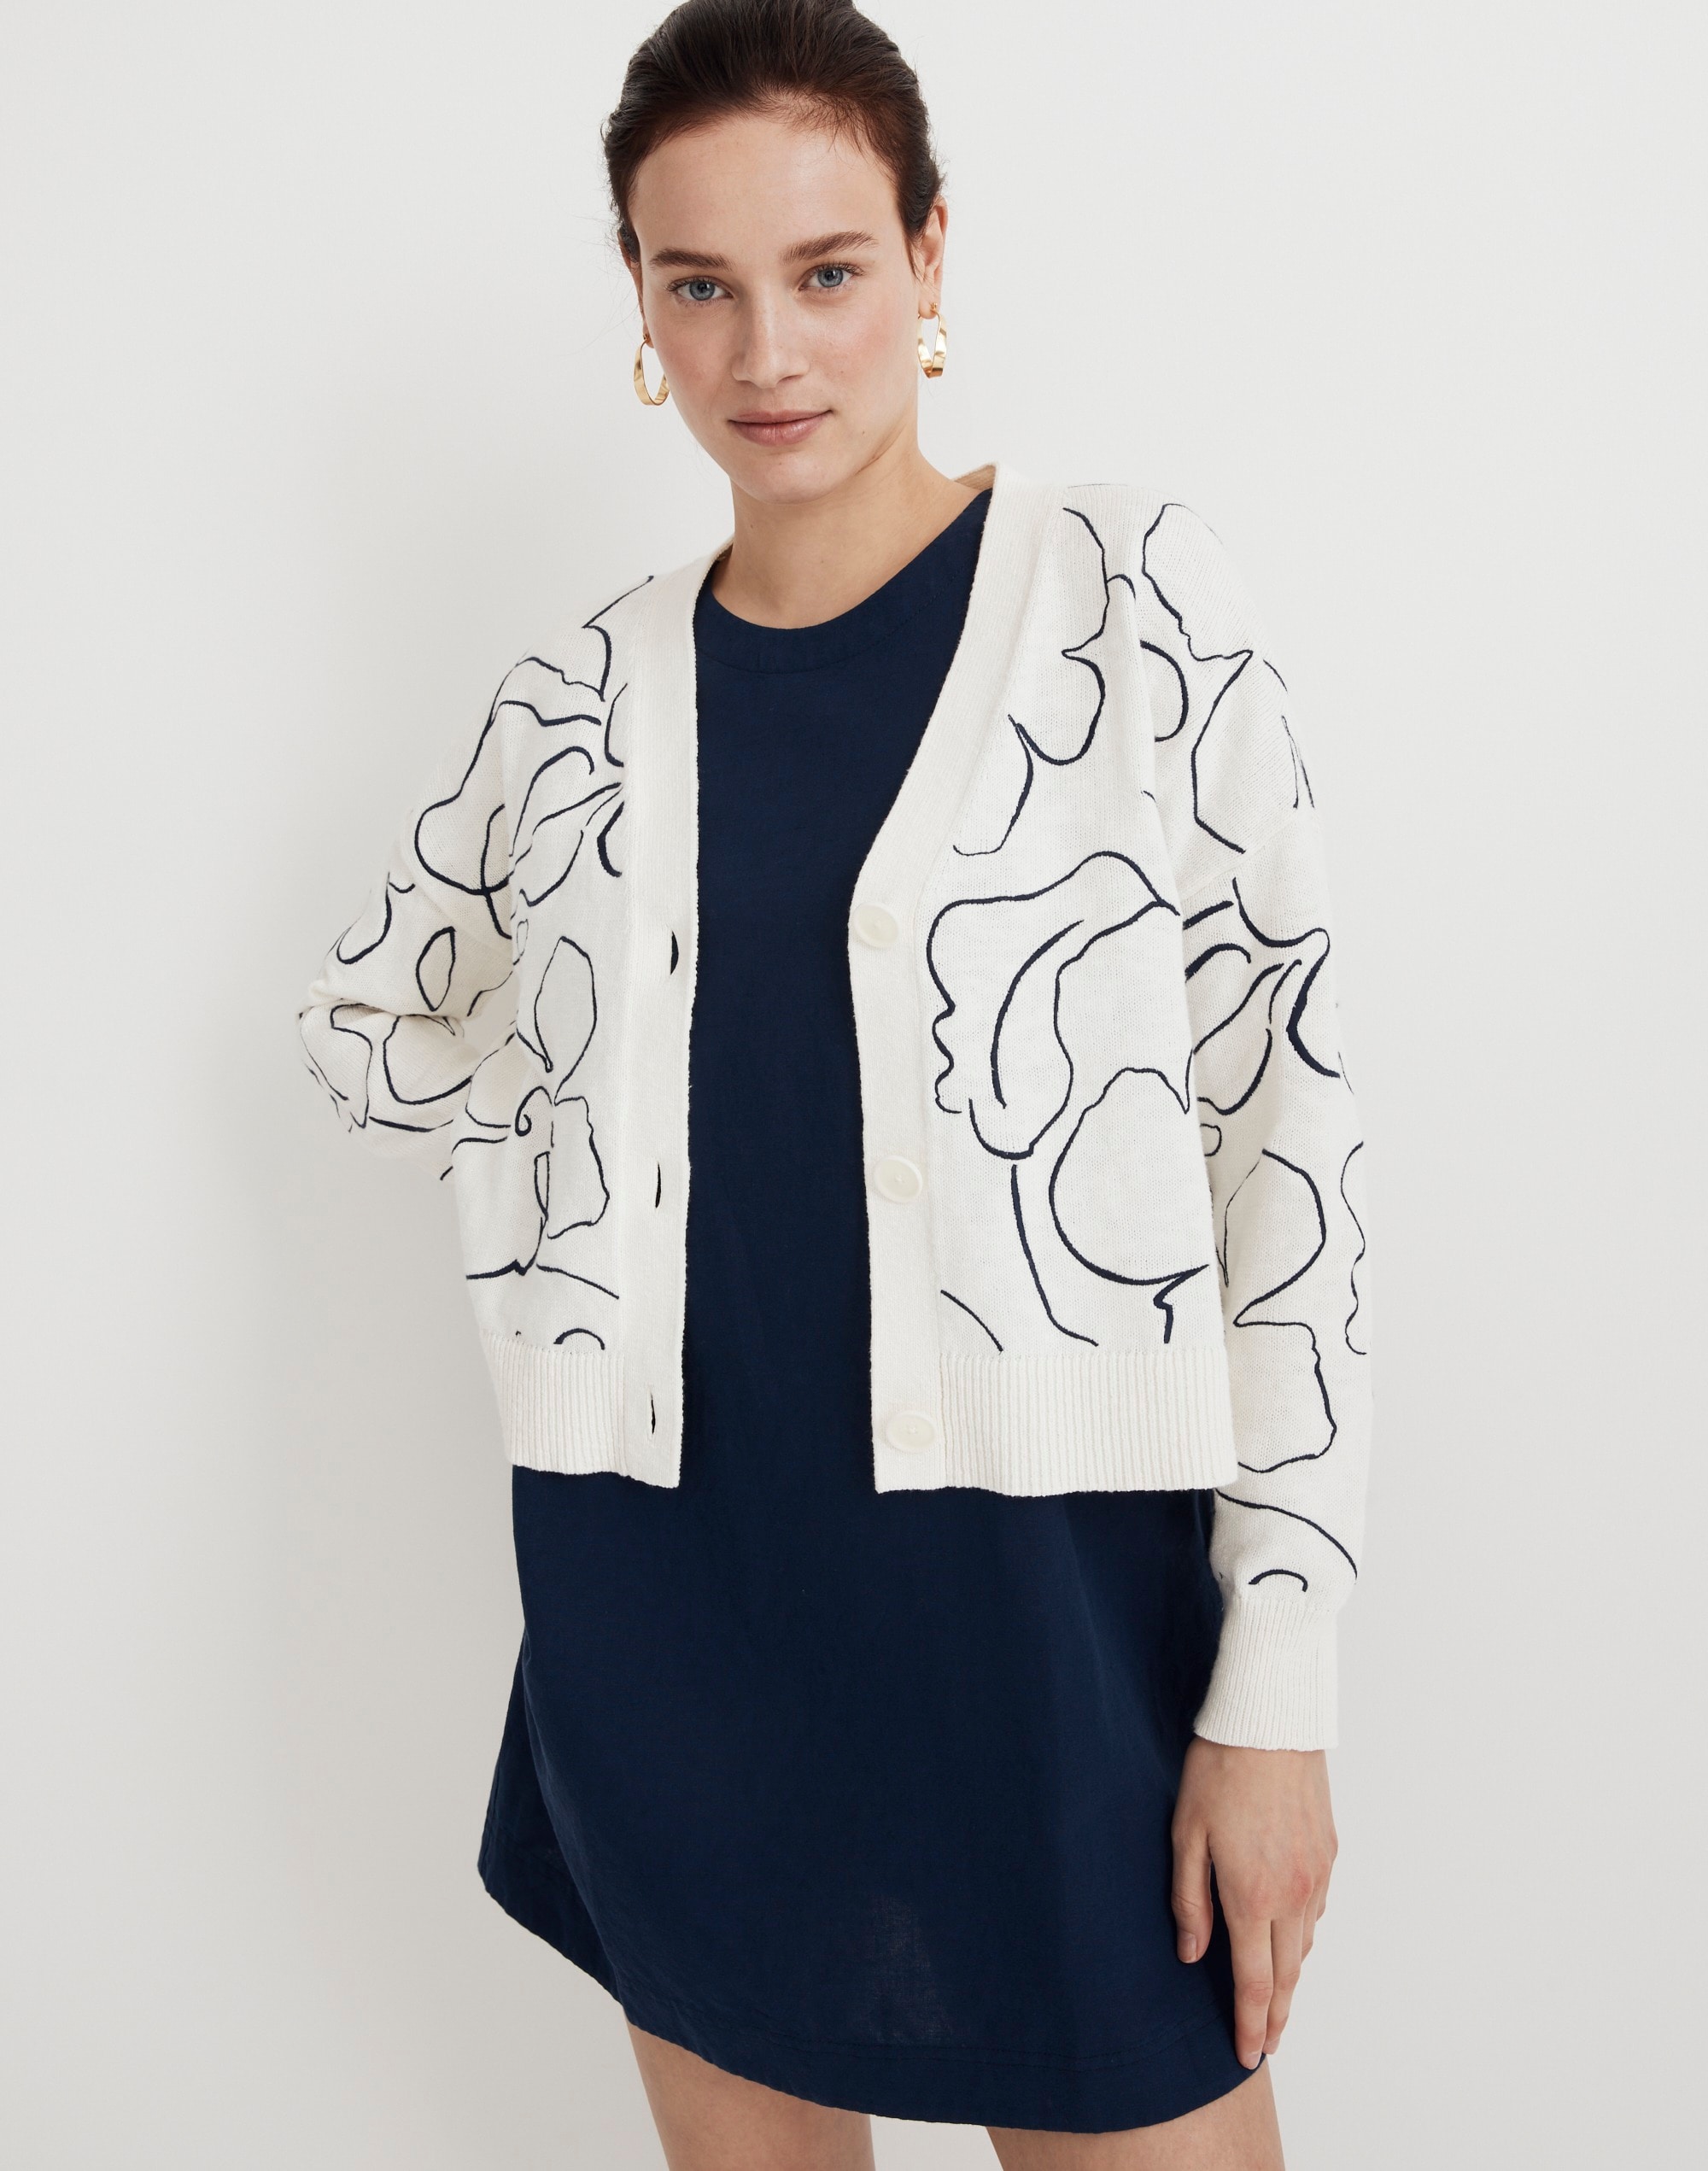 Monogram ladies sweater – Flax Blossom